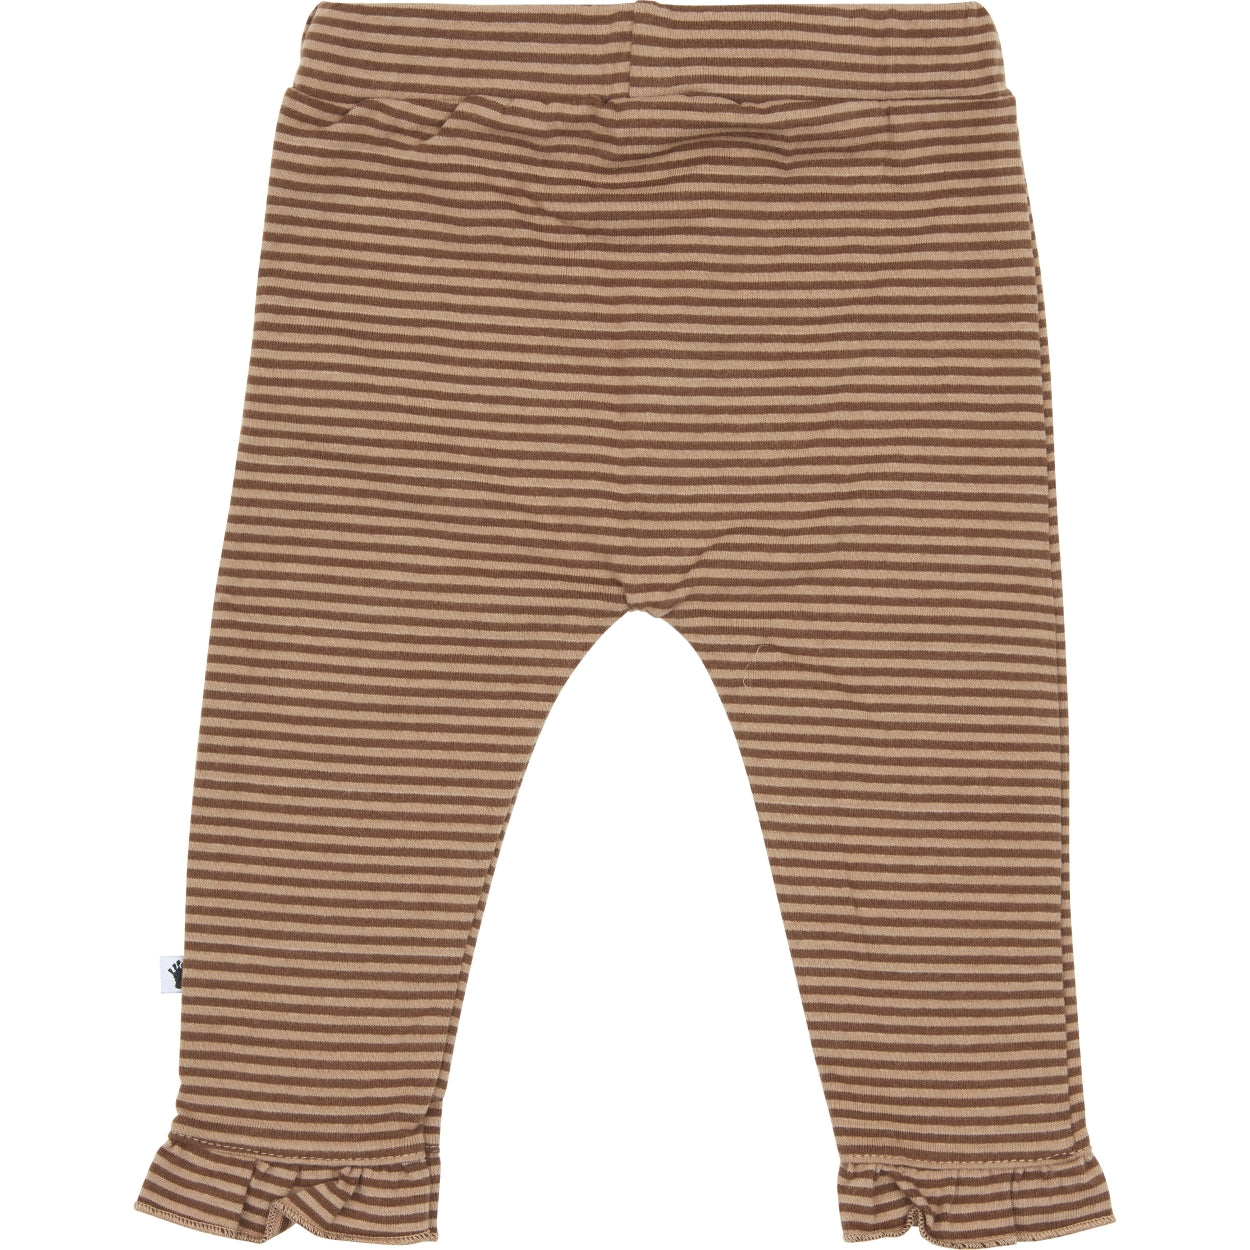 Meisjes Trousers Ruffle van Klein Baby in de kleur Stripe Burro/Rawhide in maat 74.